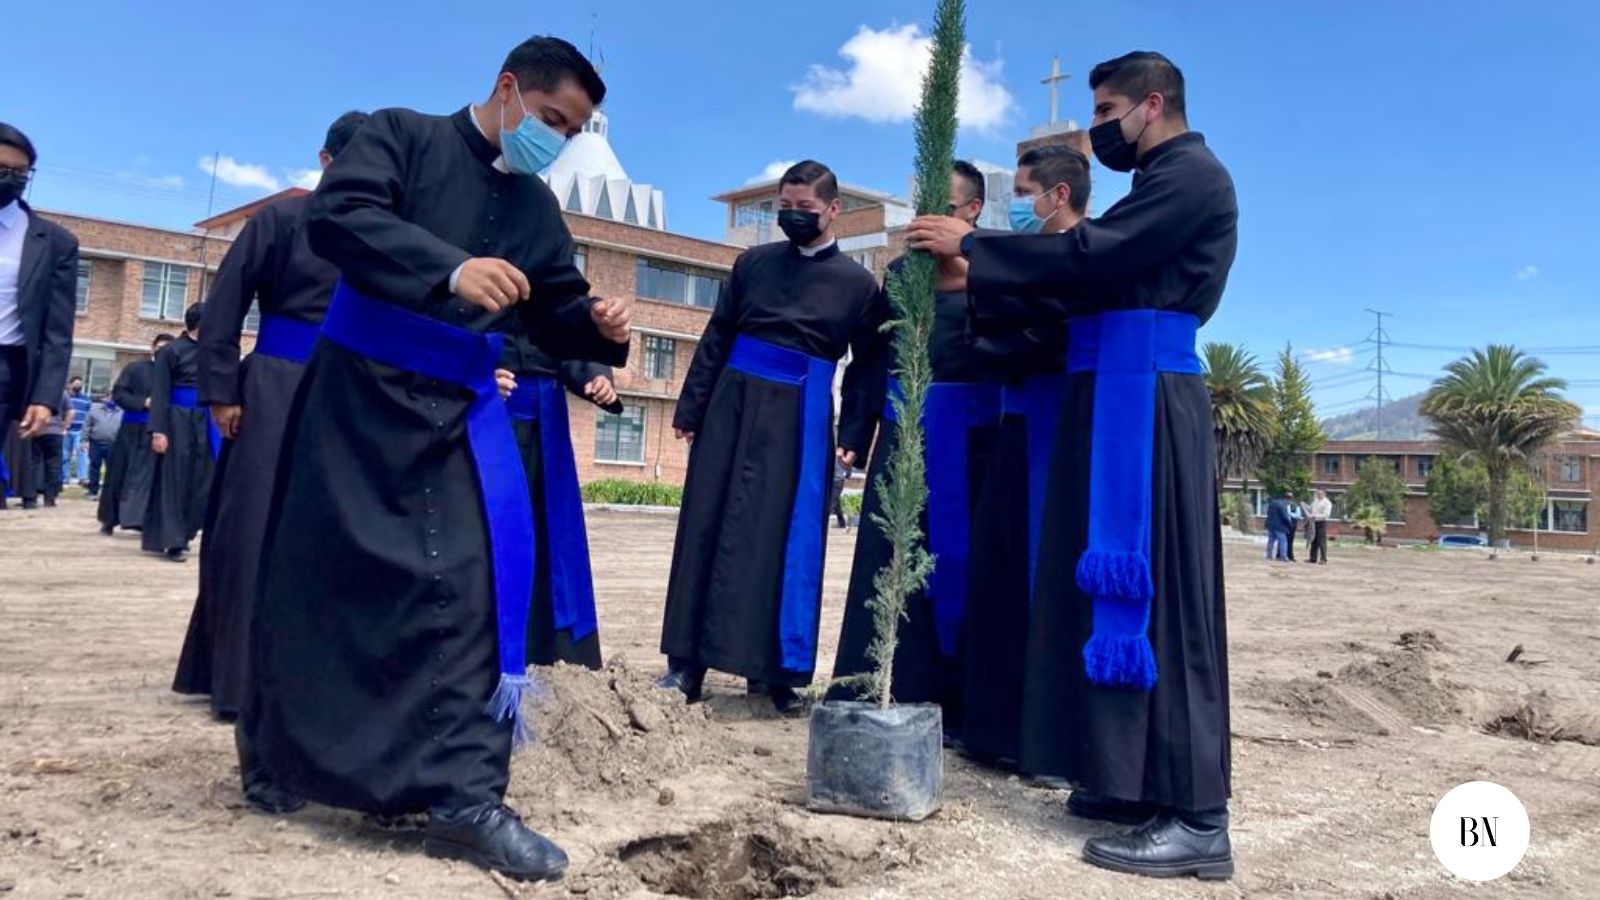 Plantación de árboles a cargo de seminaristas